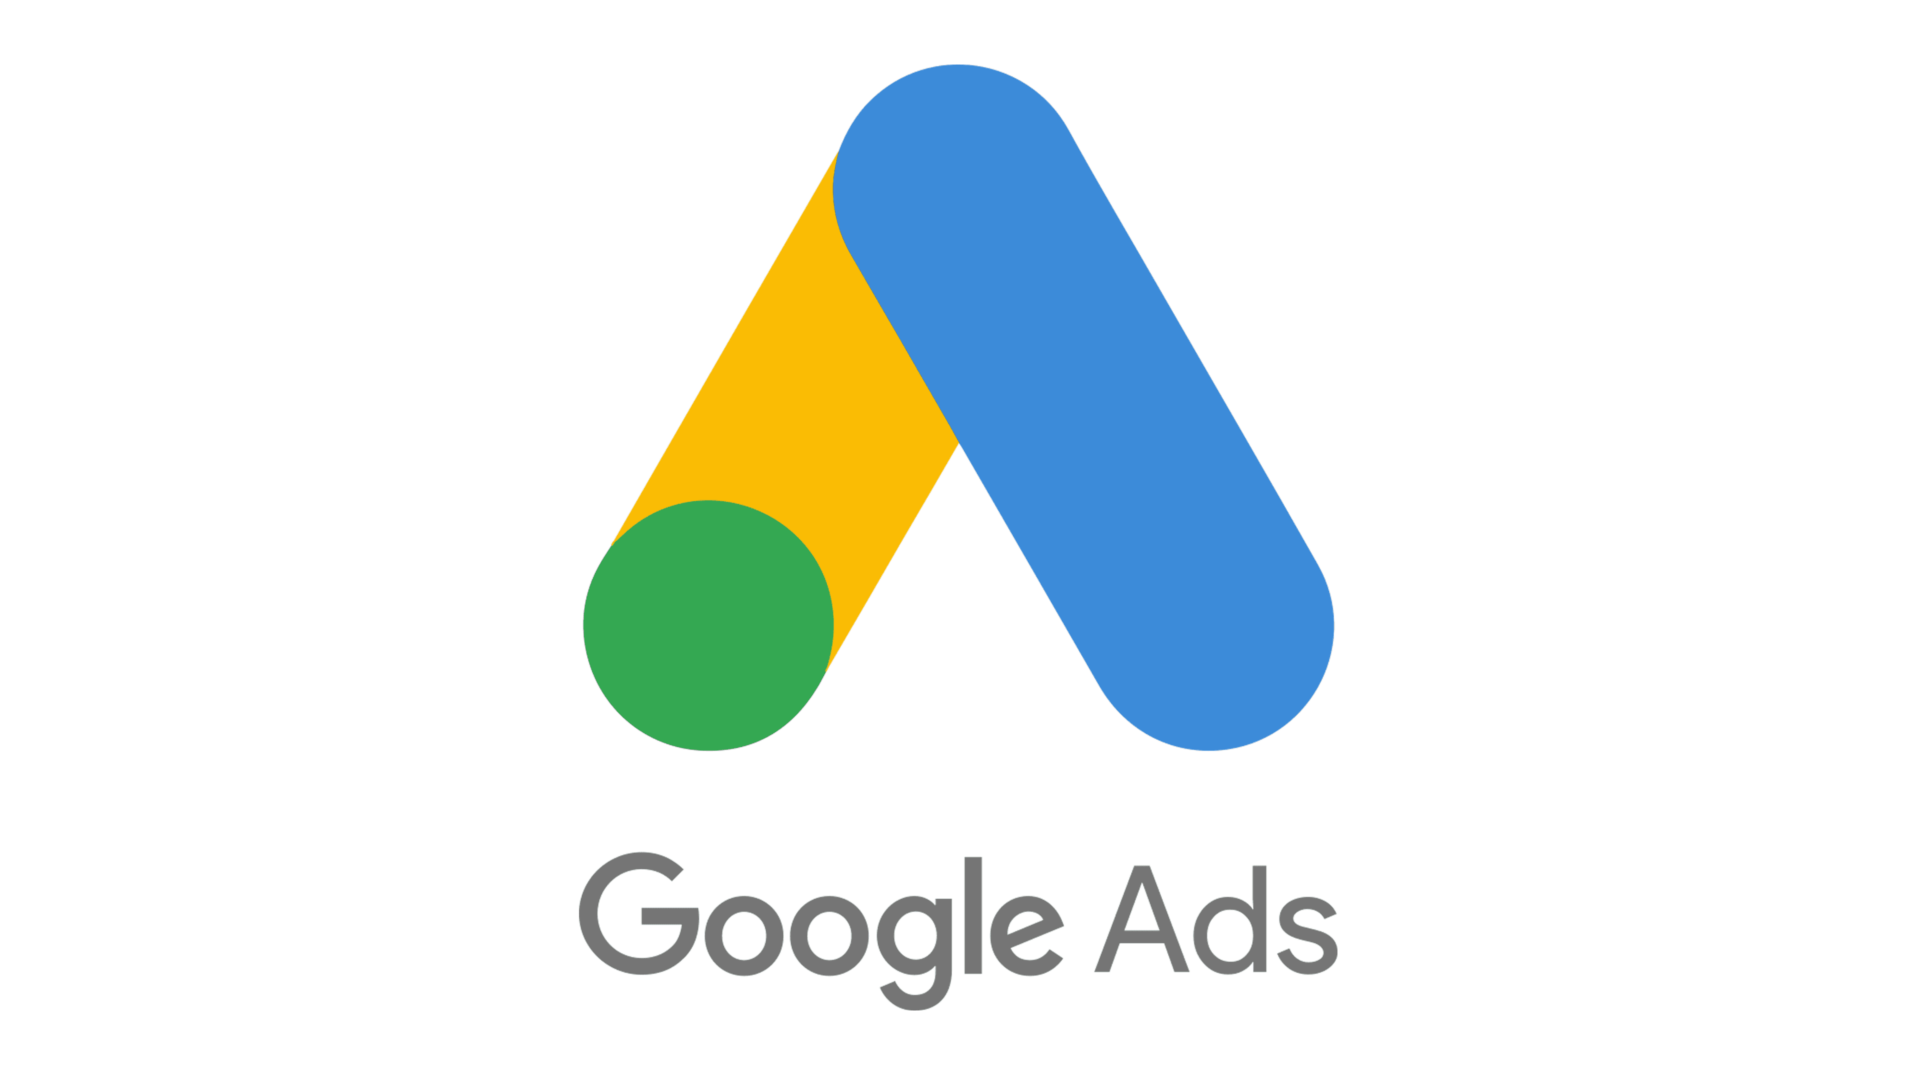 Google Ads Logo - Not The Same